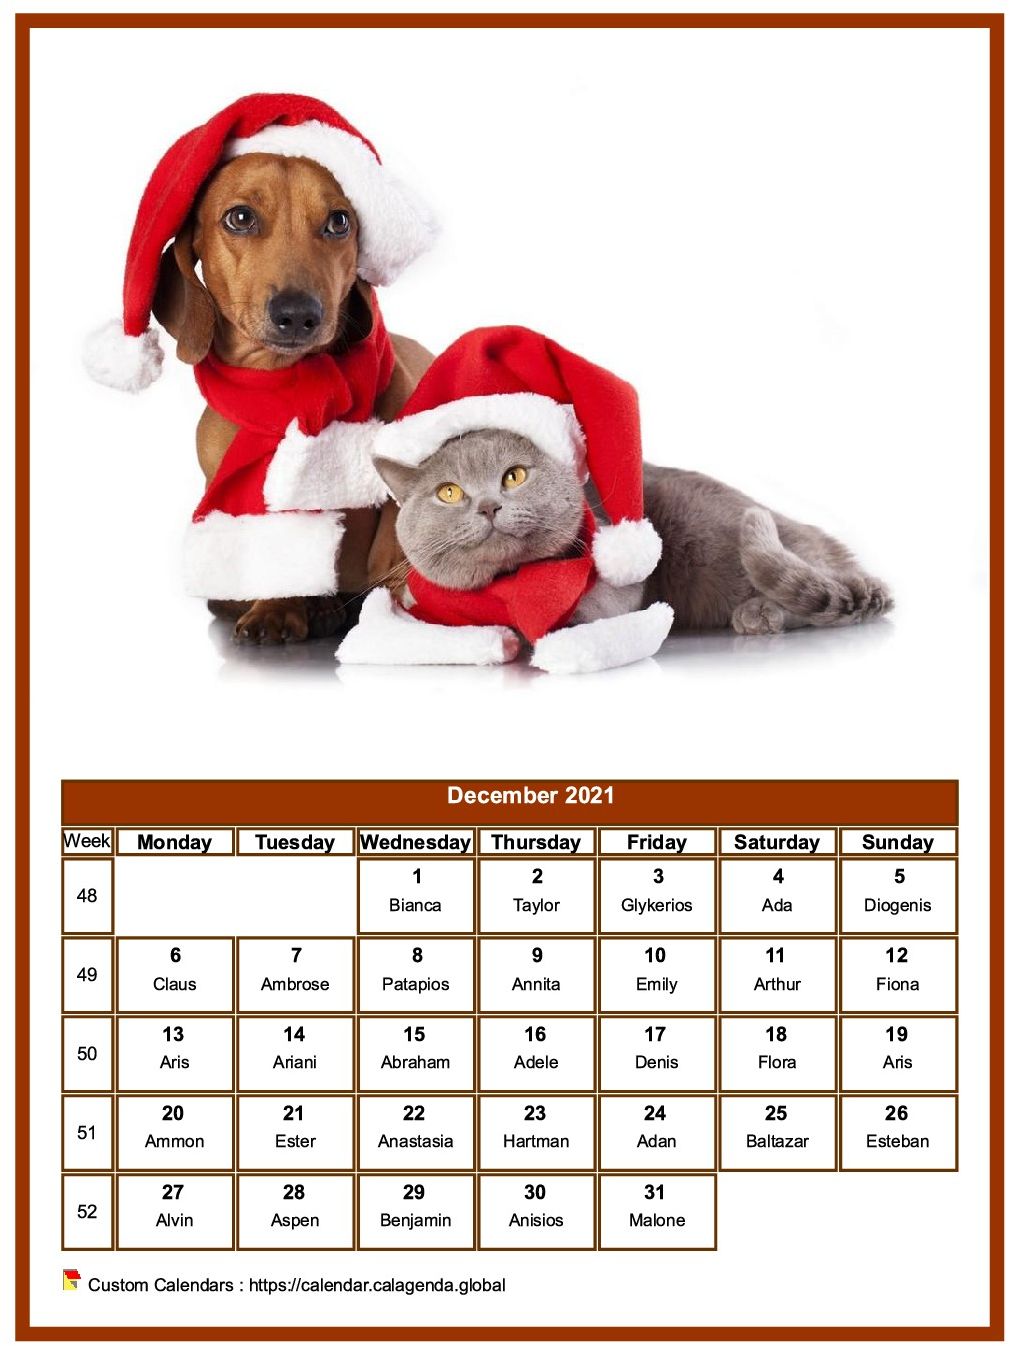 Calendar December 2021 dogs